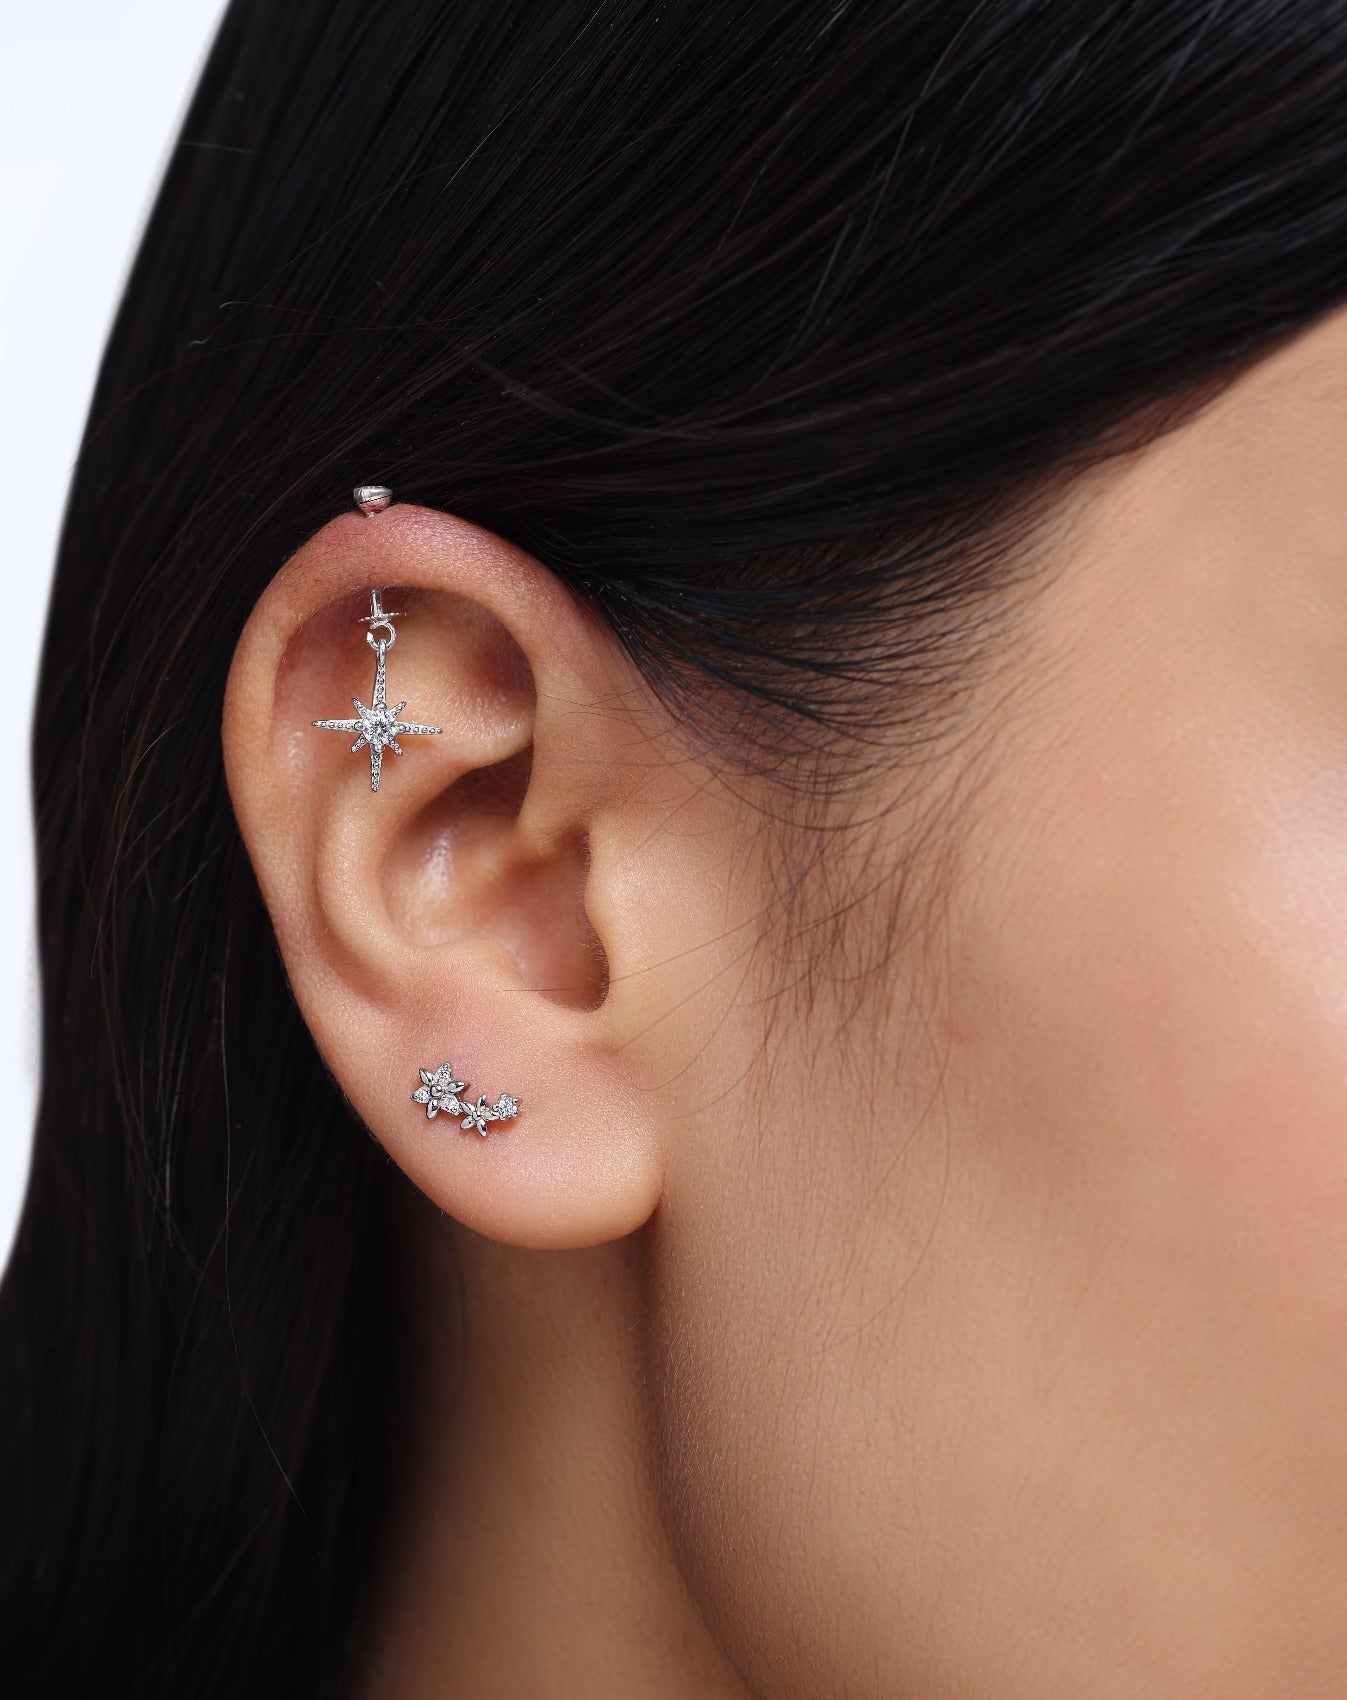 Buy 3 Pairs Sterling Silver Small Hoop Earrings | Cubic Zirconia Cuff  Earrings | 14K Gold Plated Hoop Earrings for Women | Cartilage Hoop  Earrings for Women Girls (10mm) at Amazon.in